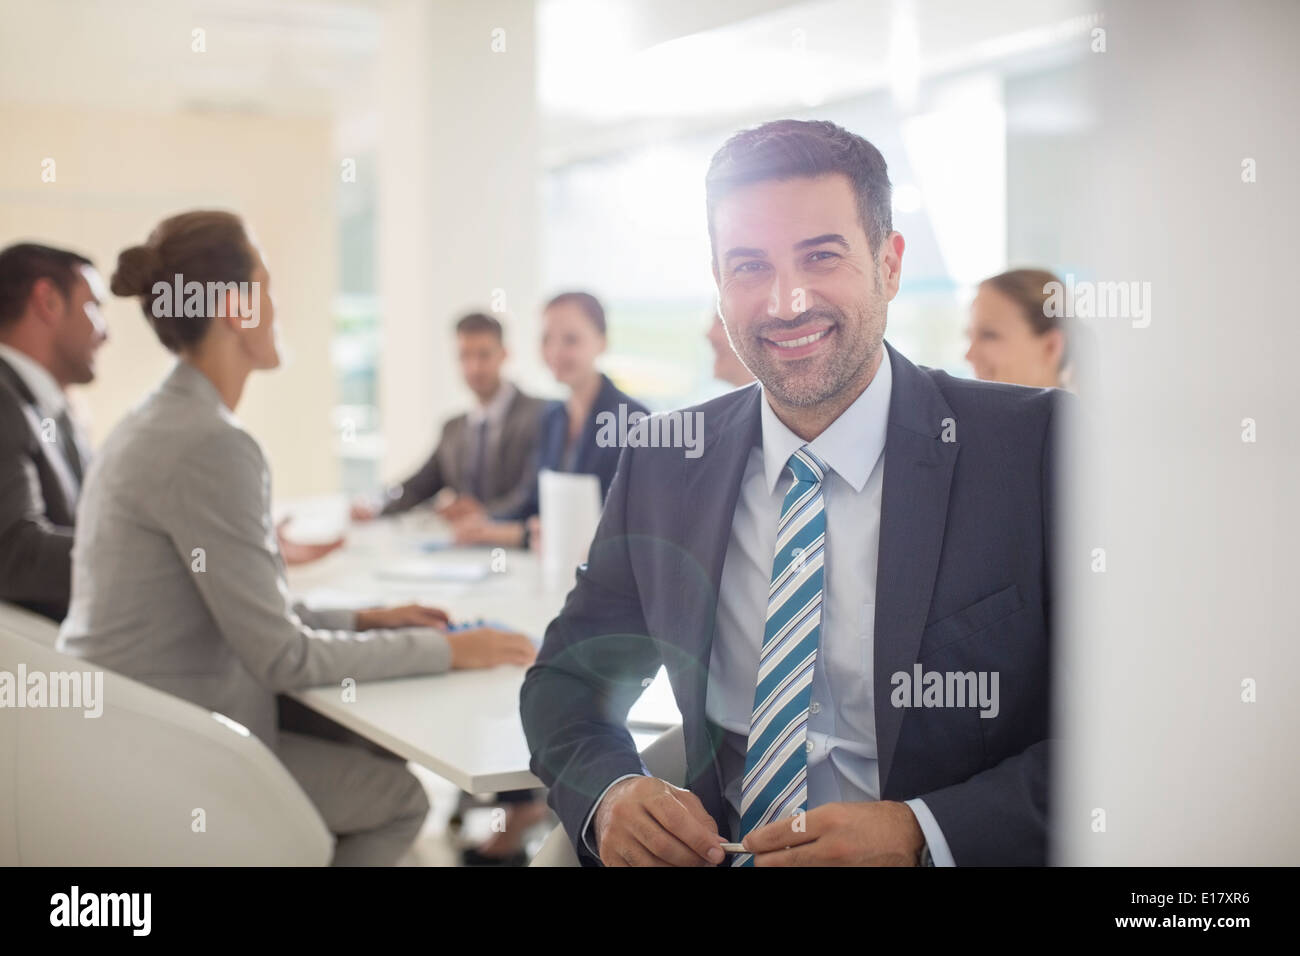 Portrait of smiling businessman in conference room Banque D'Images